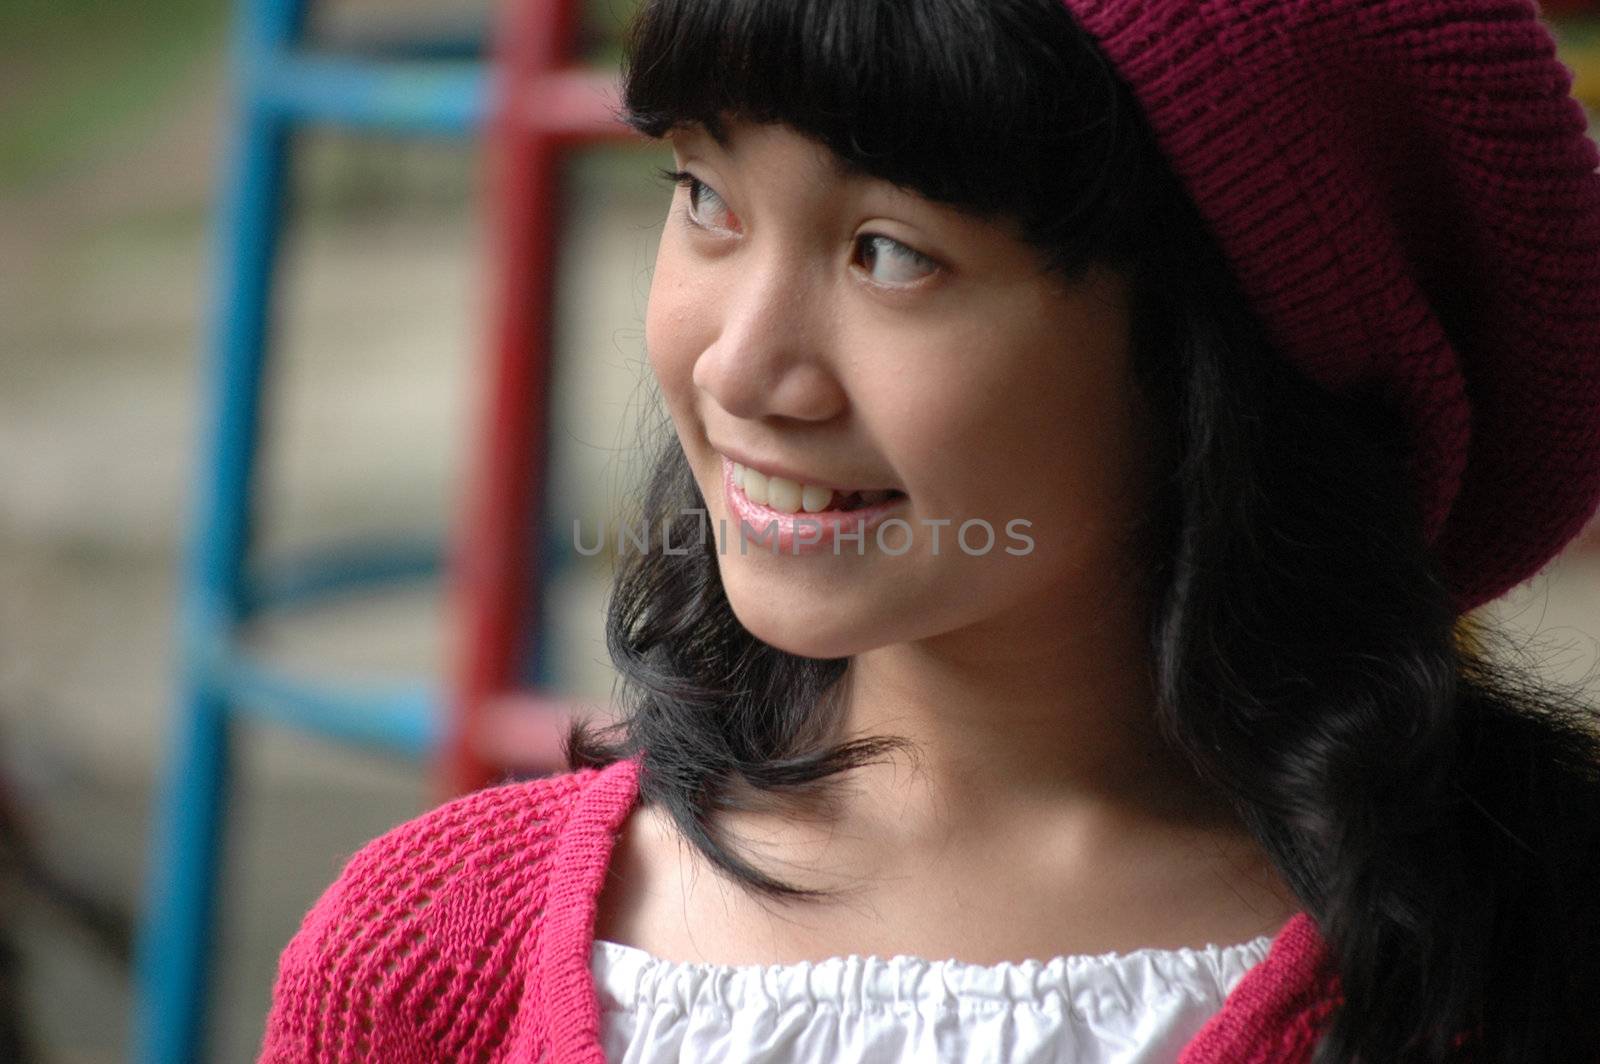 cute asian girl wearing pink hat